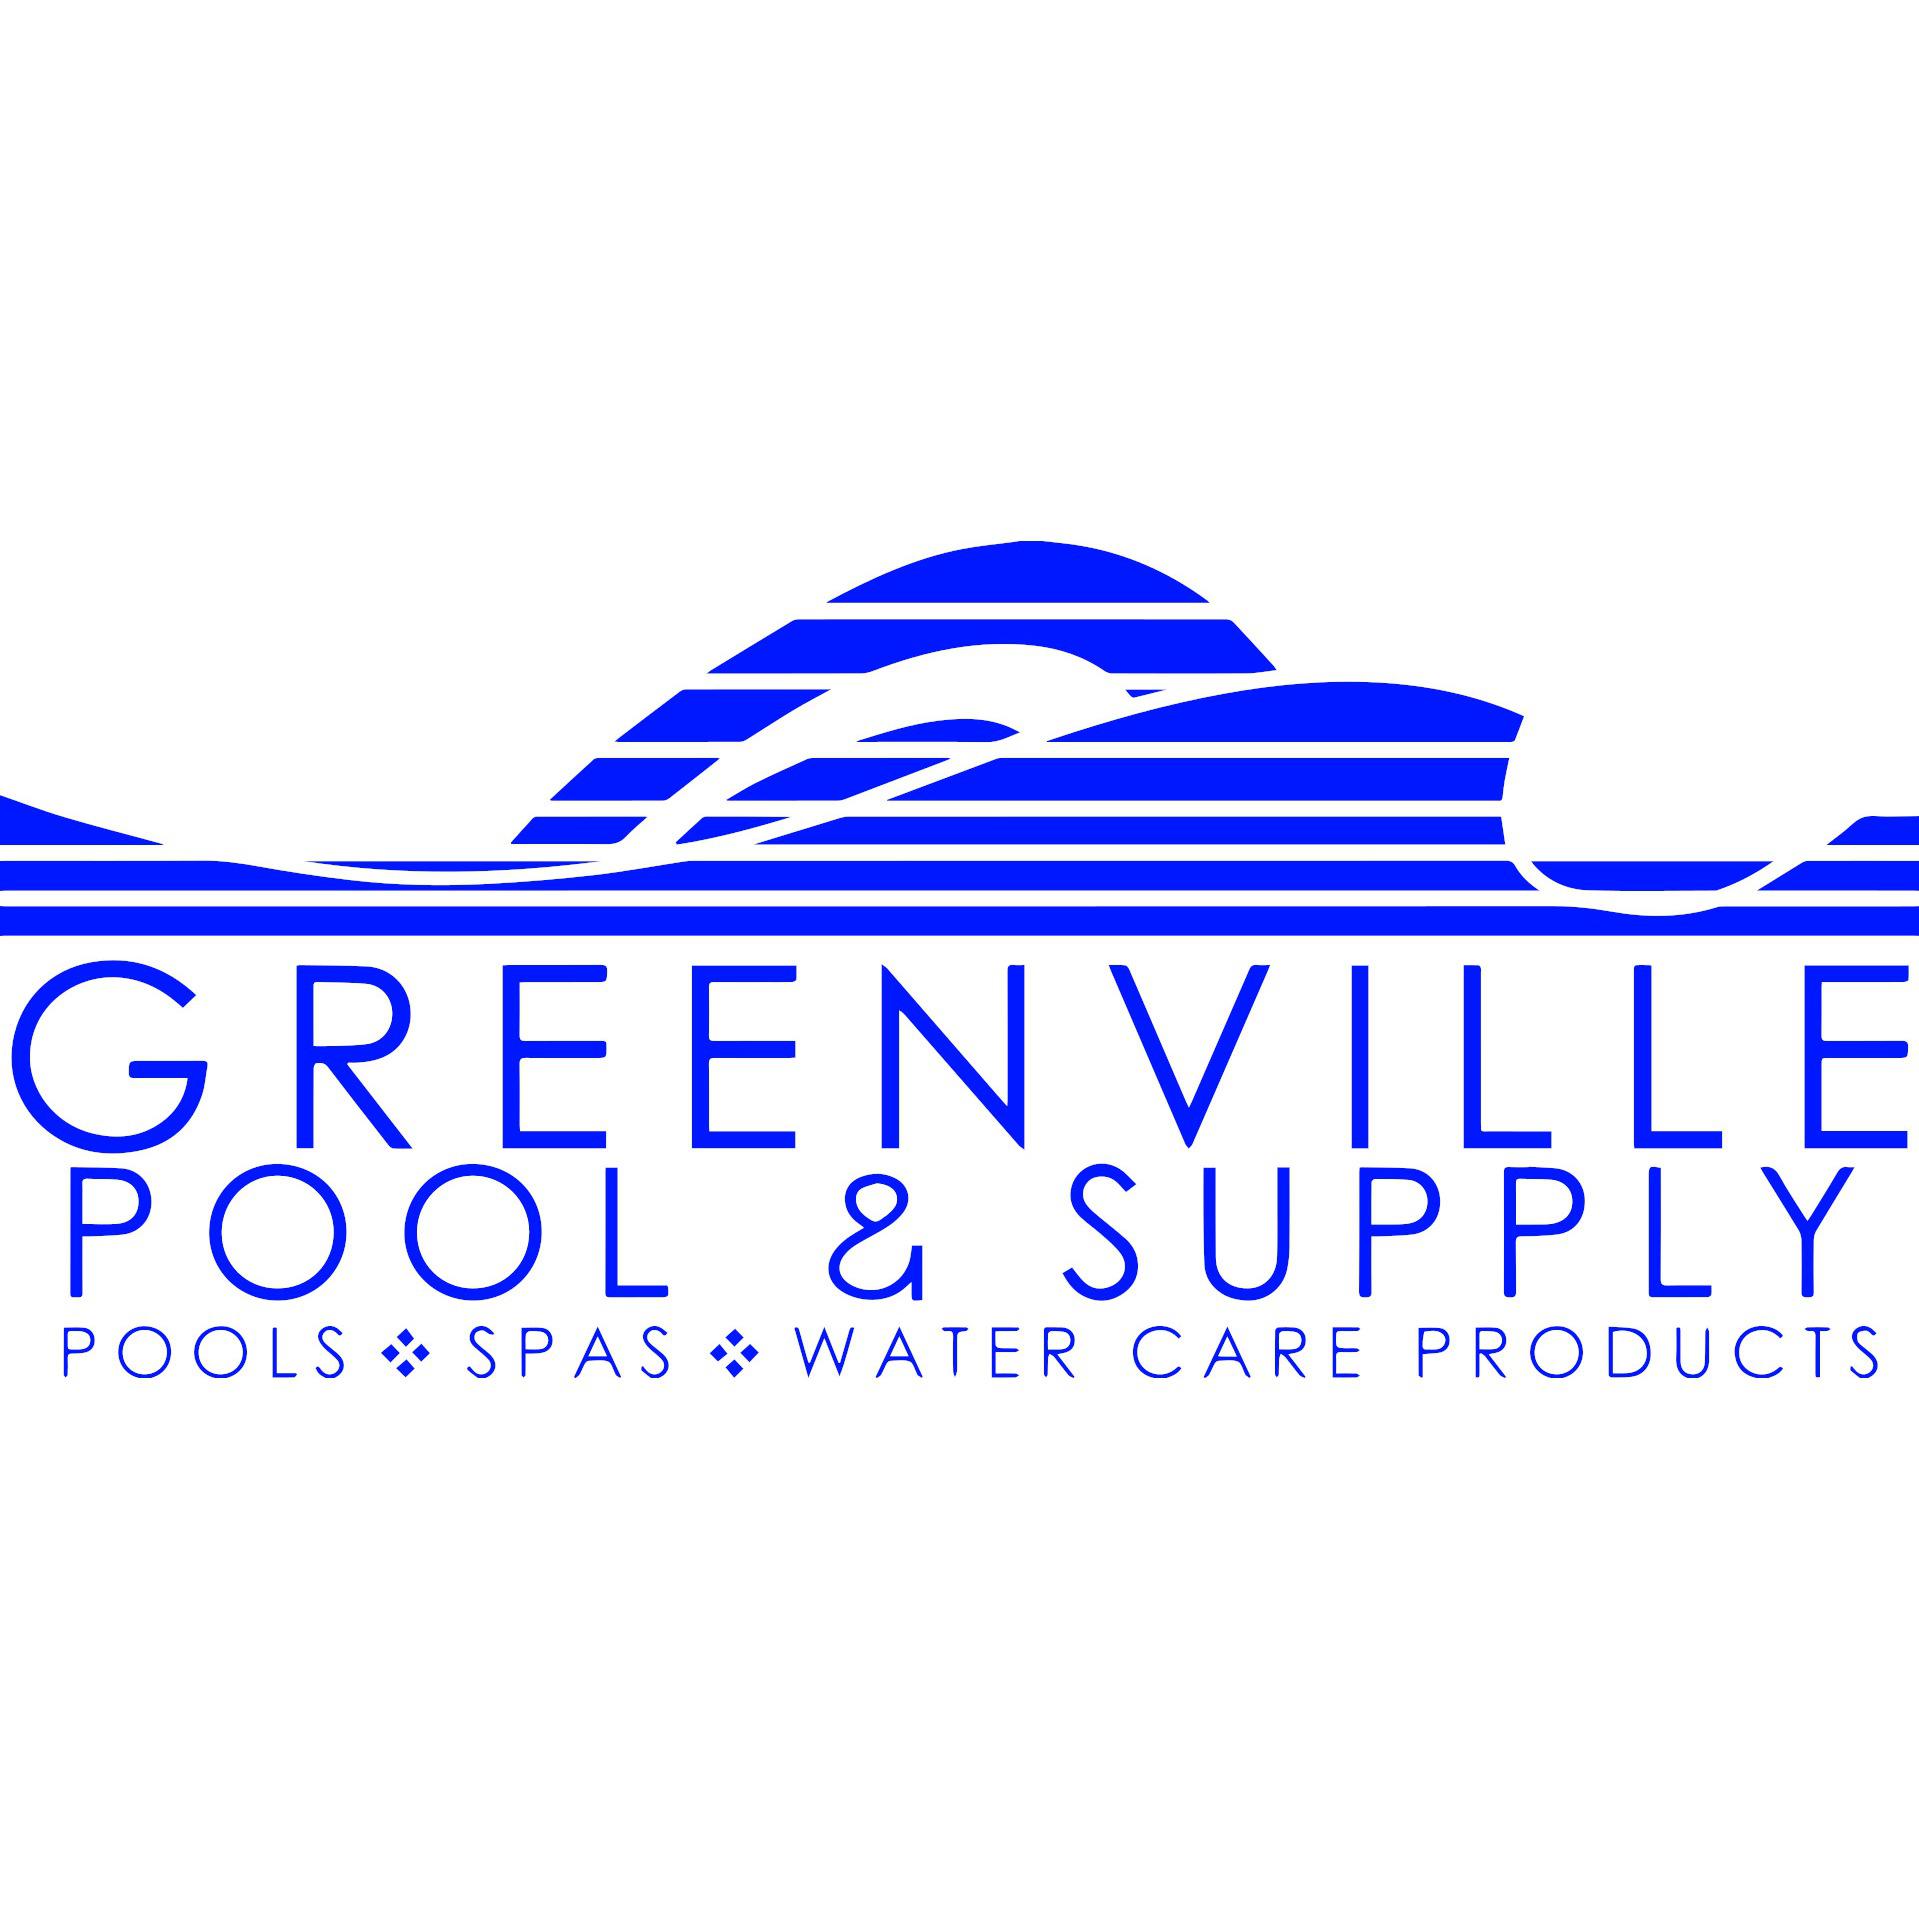 Greenville Pool & Supply